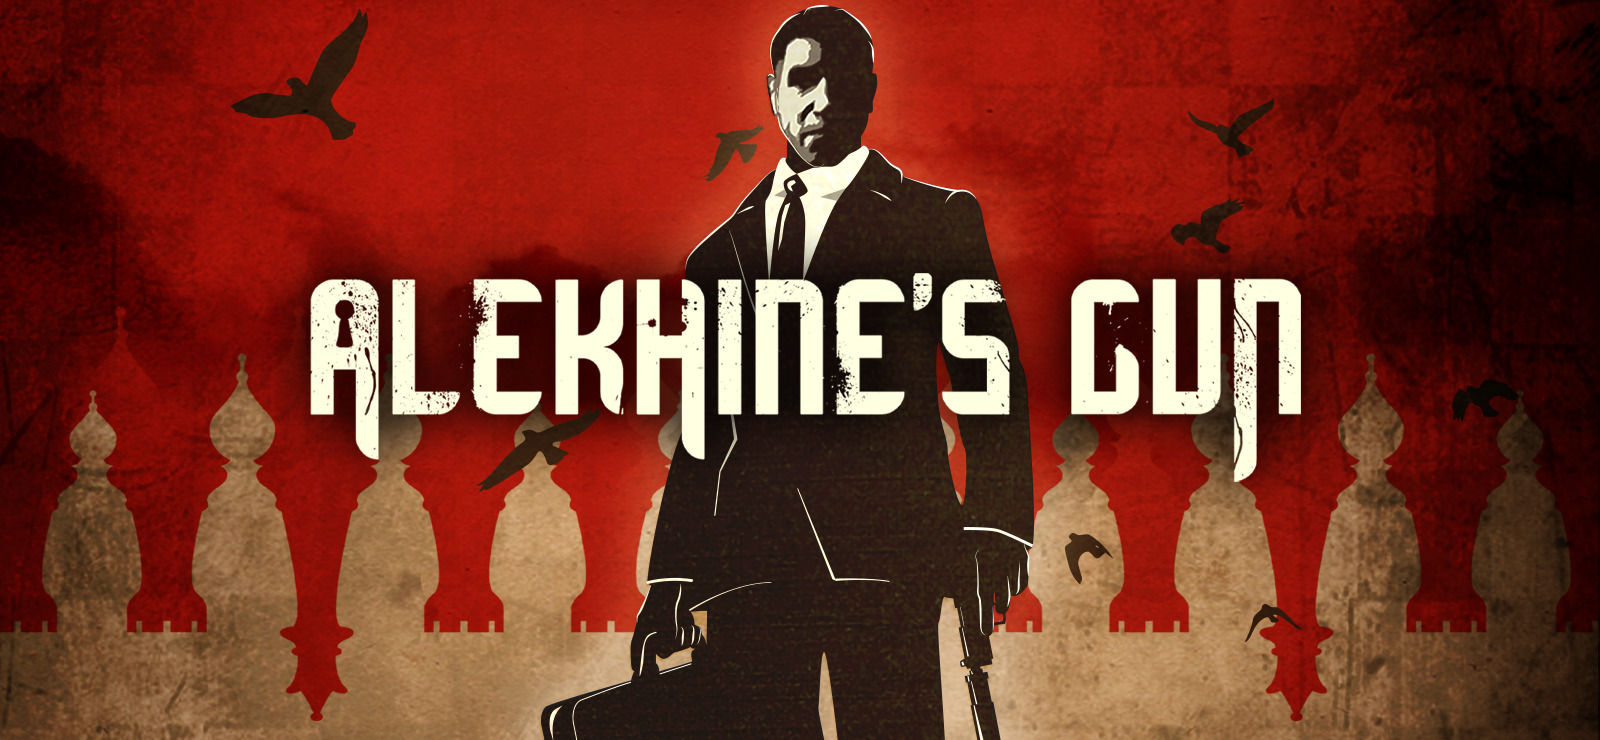 Steam Community :: Alekhine's Gun